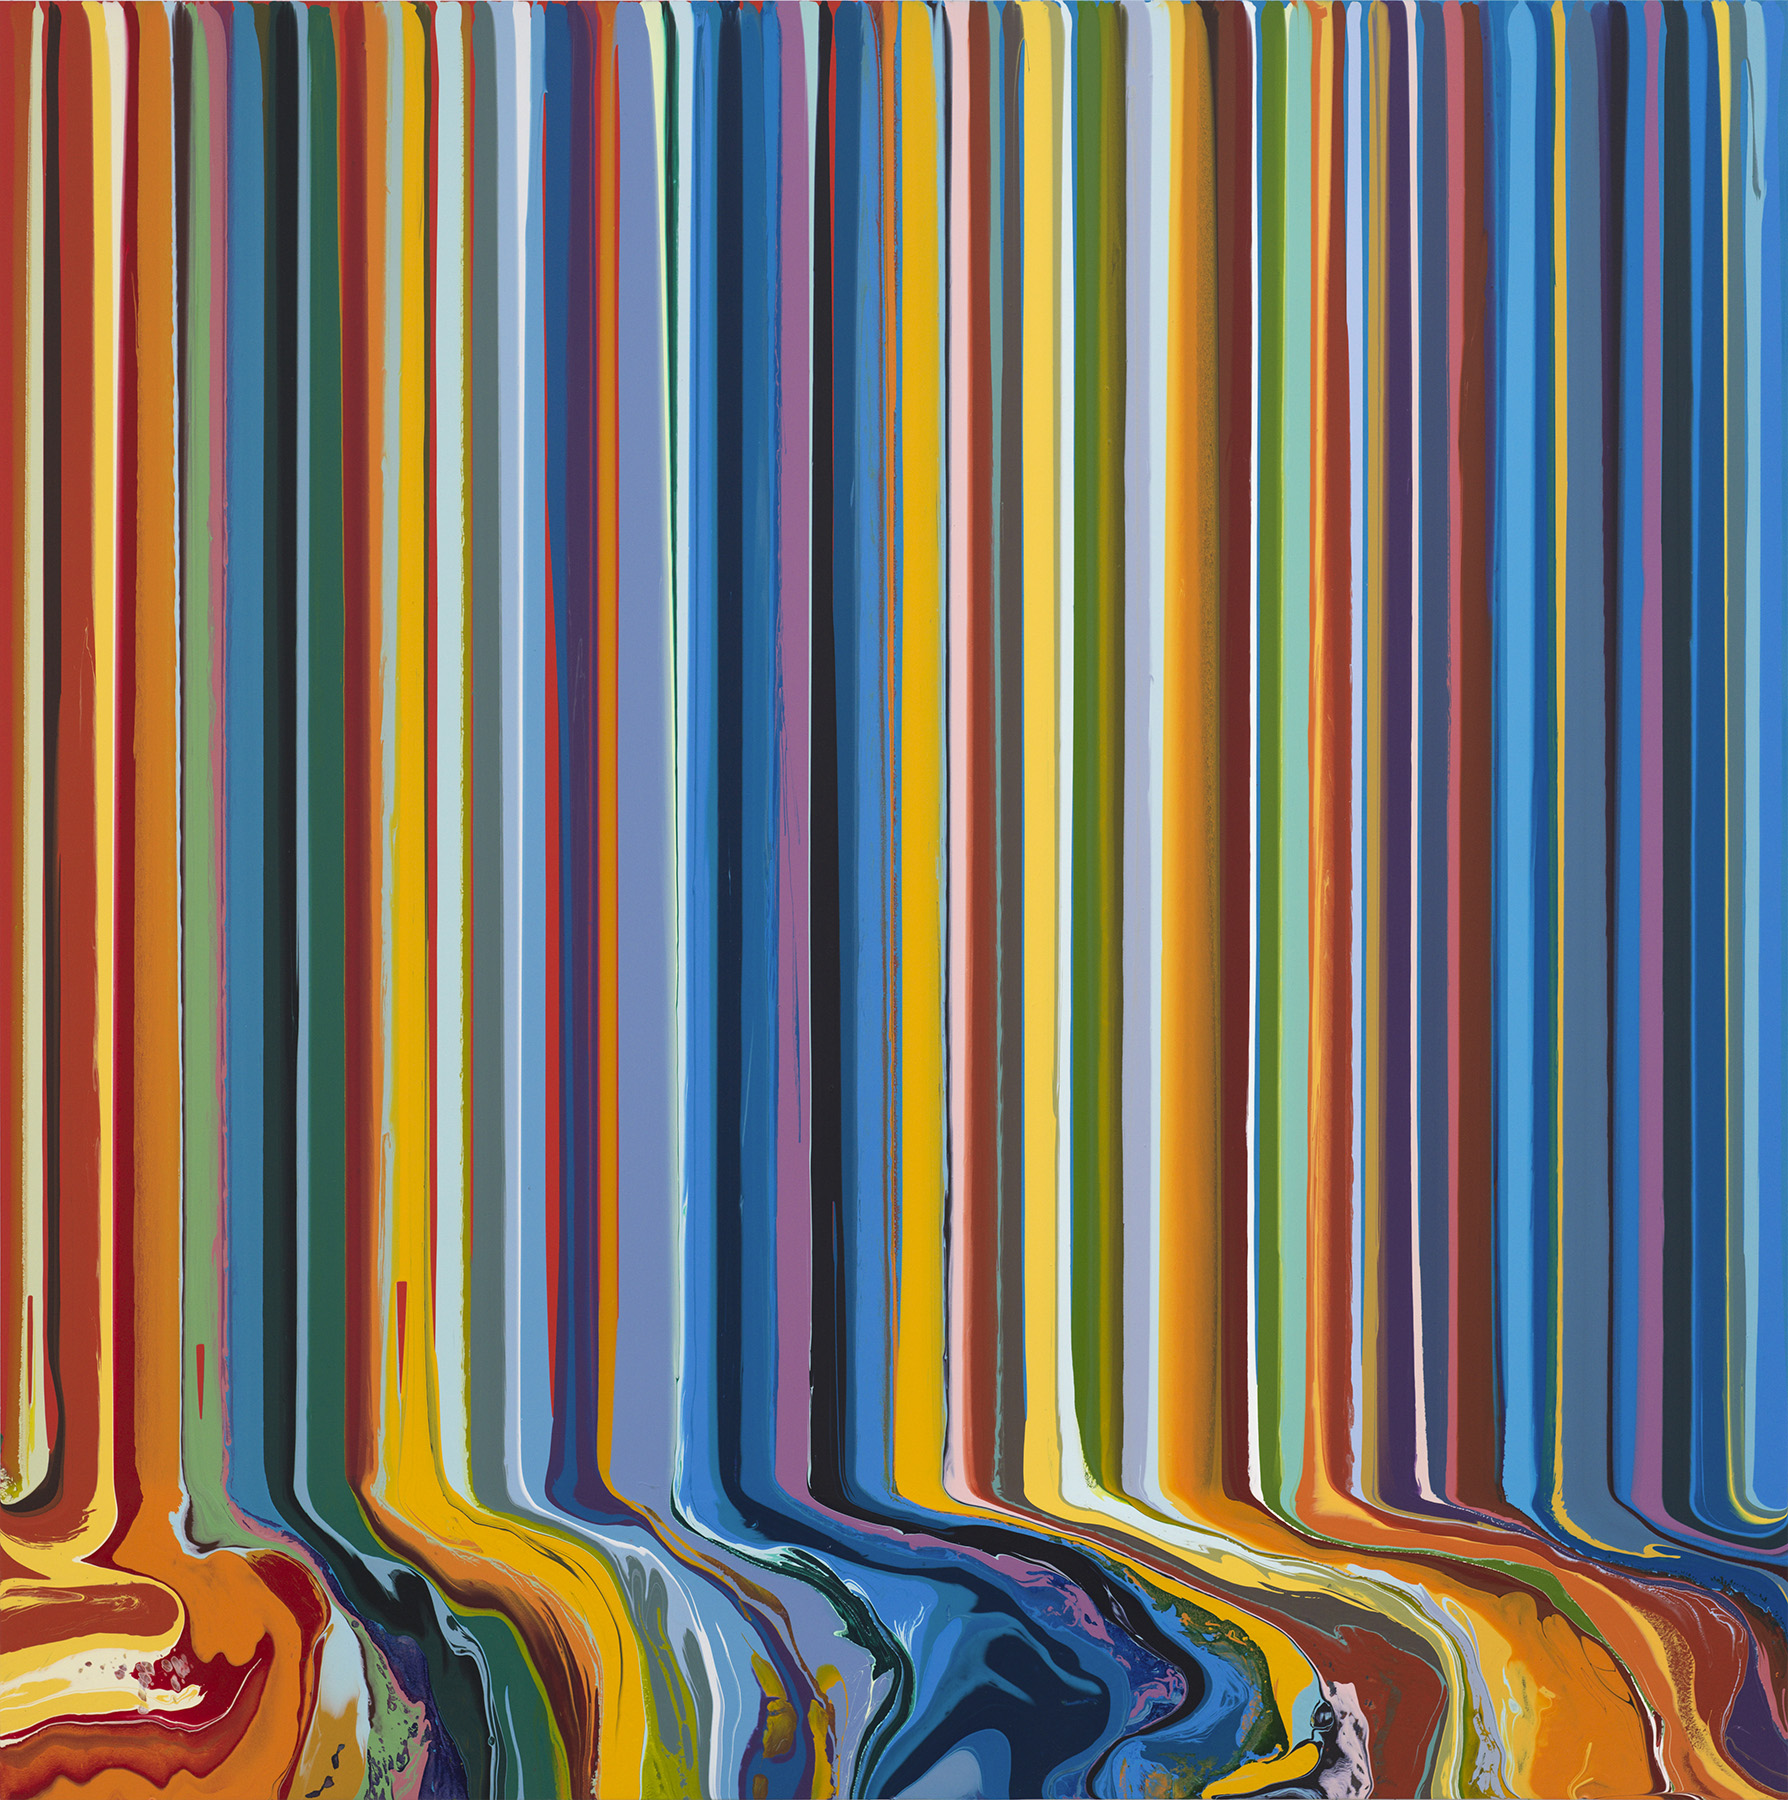 Ian Davenport, Turquoise and Orange Study (After Bonnard), 2018. Acrylic on aluminium mounted on aluminium panel, 101.6 x 101.6 cm